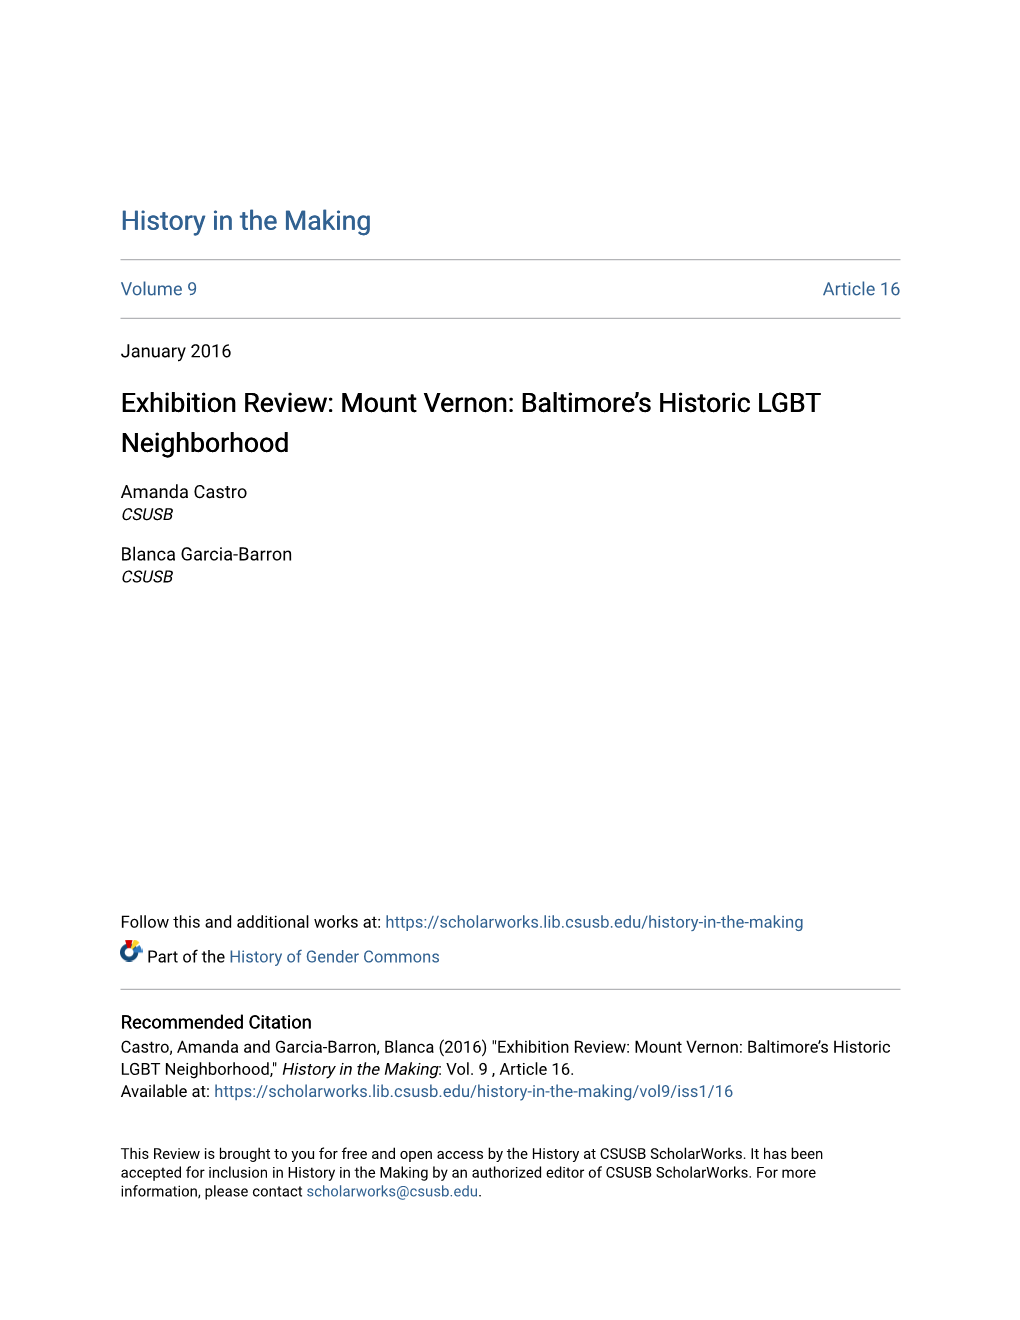 Mount Vernon: Baltimore’S Historic LGBT Neighborhood